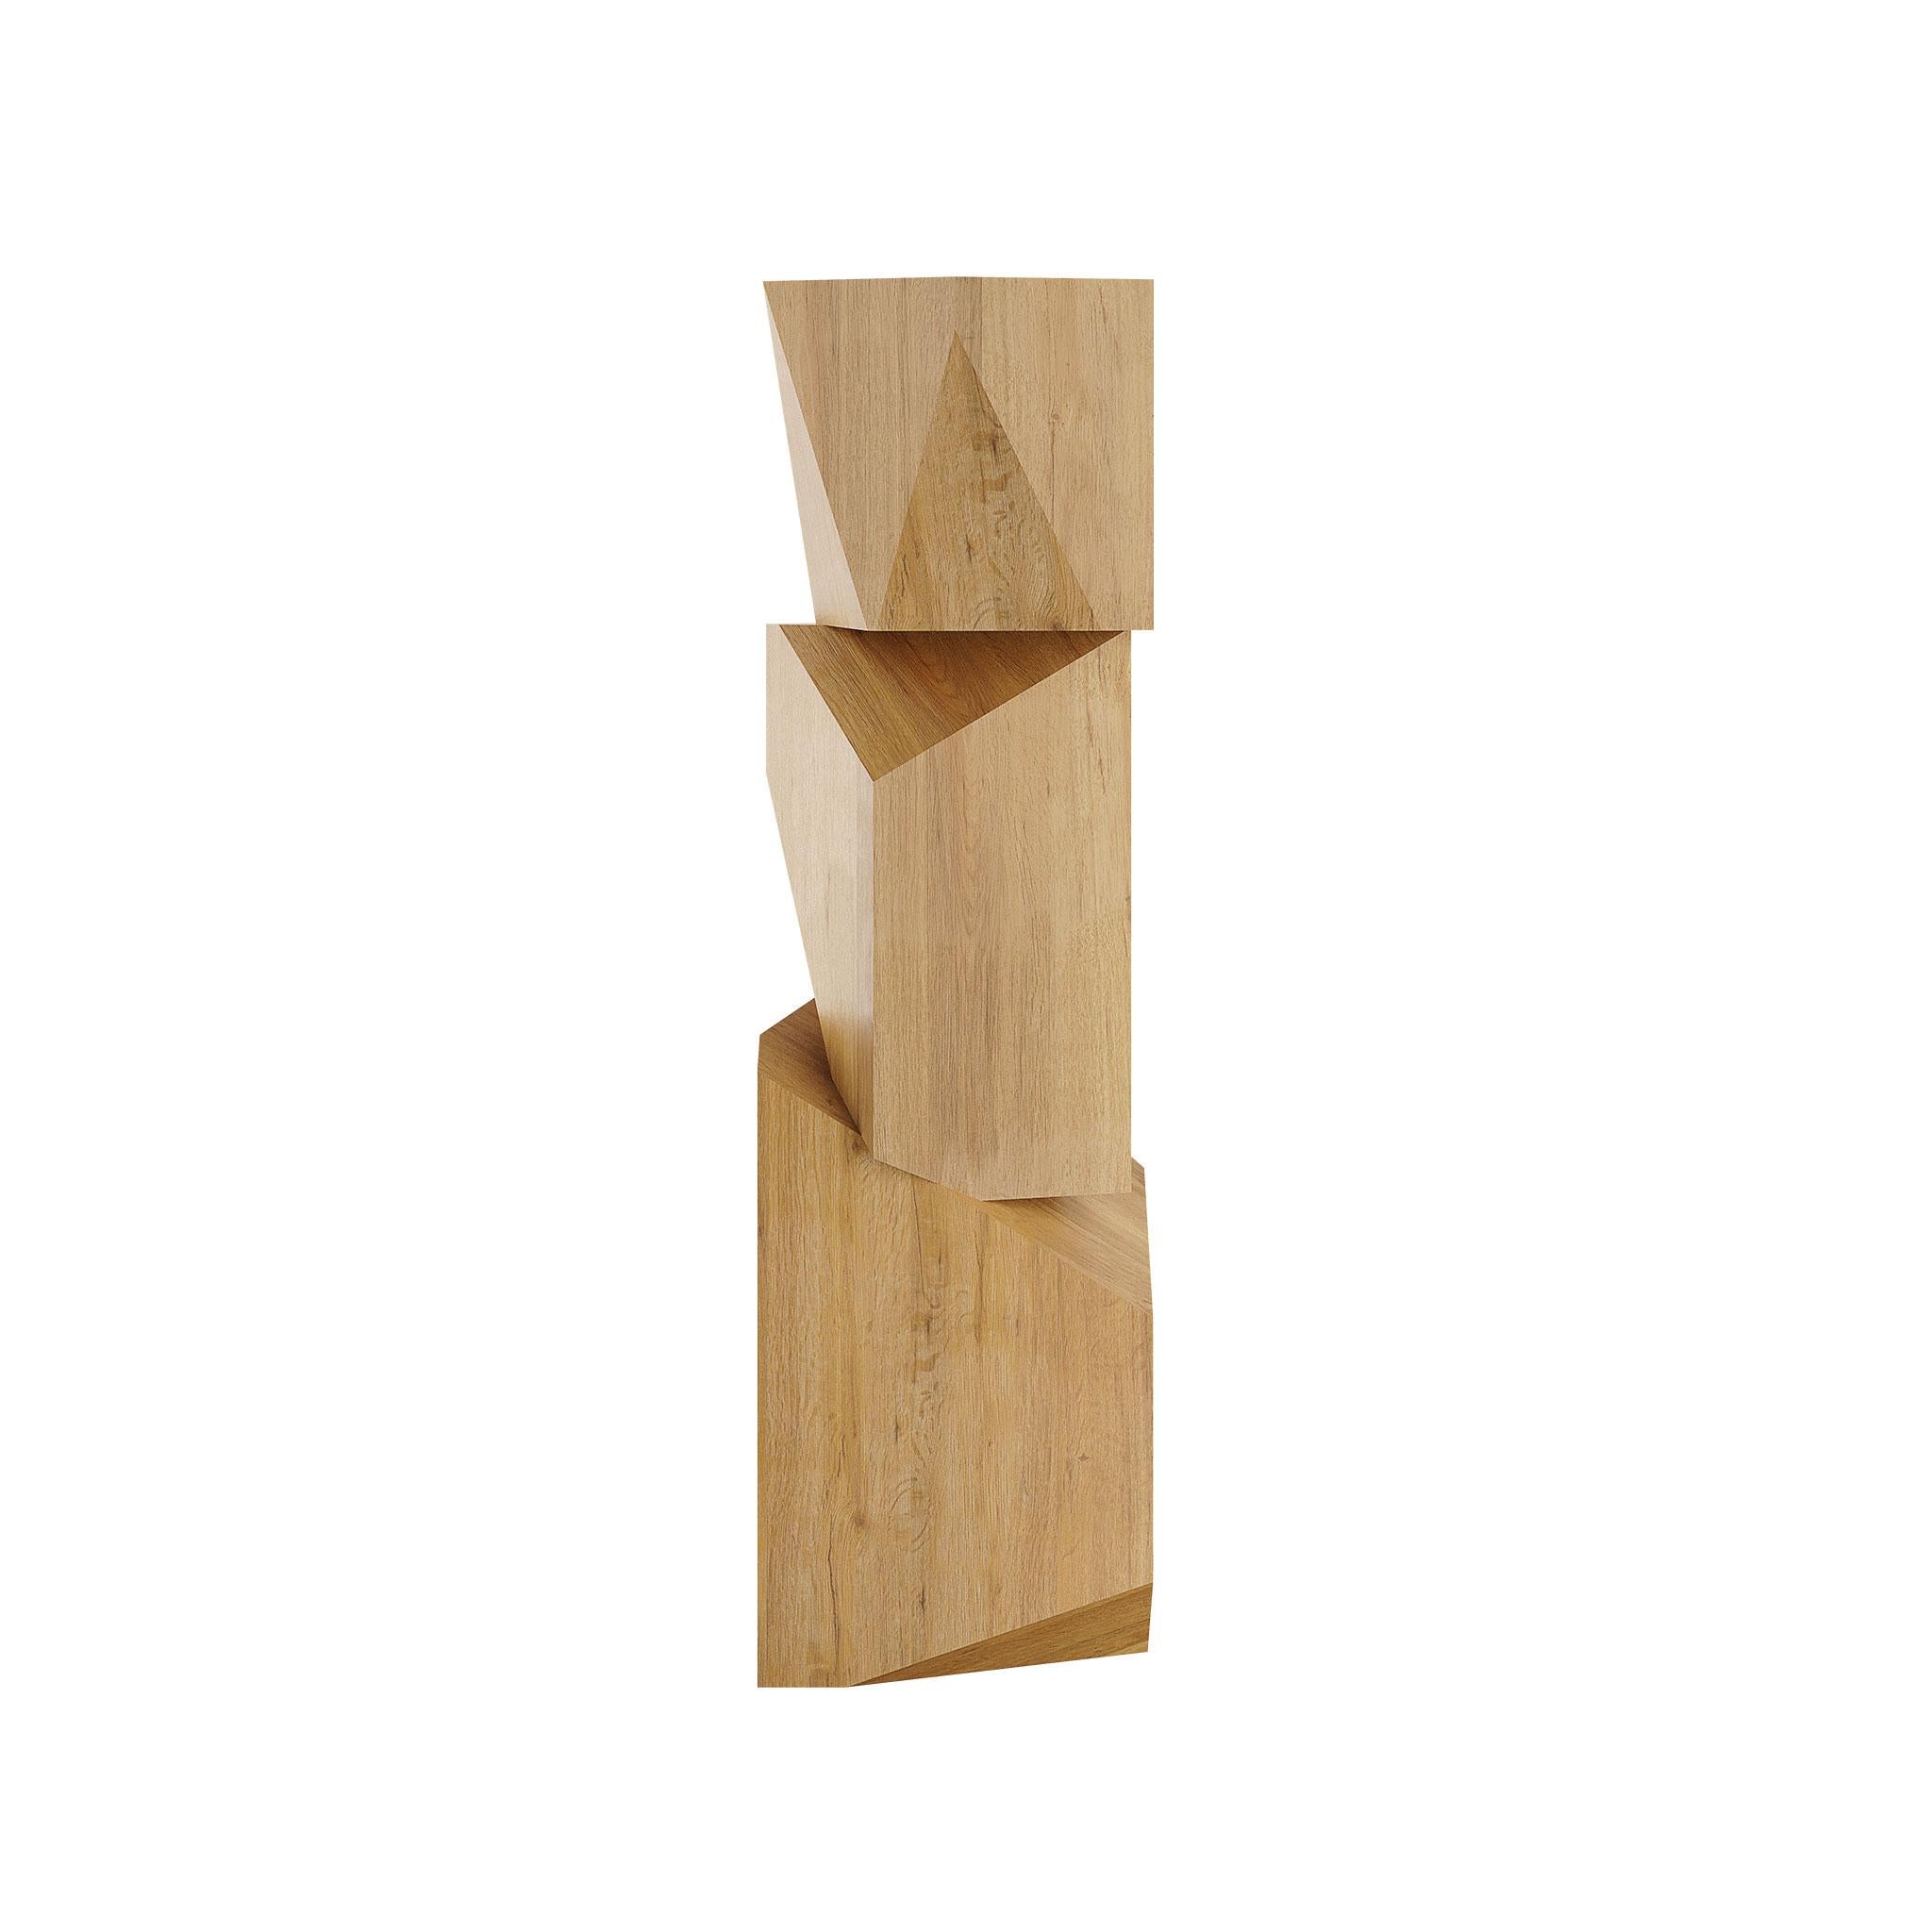 European Contemporary Customizable Carved Wood Totem Sculpture Pole in Oak Veneer For Sale